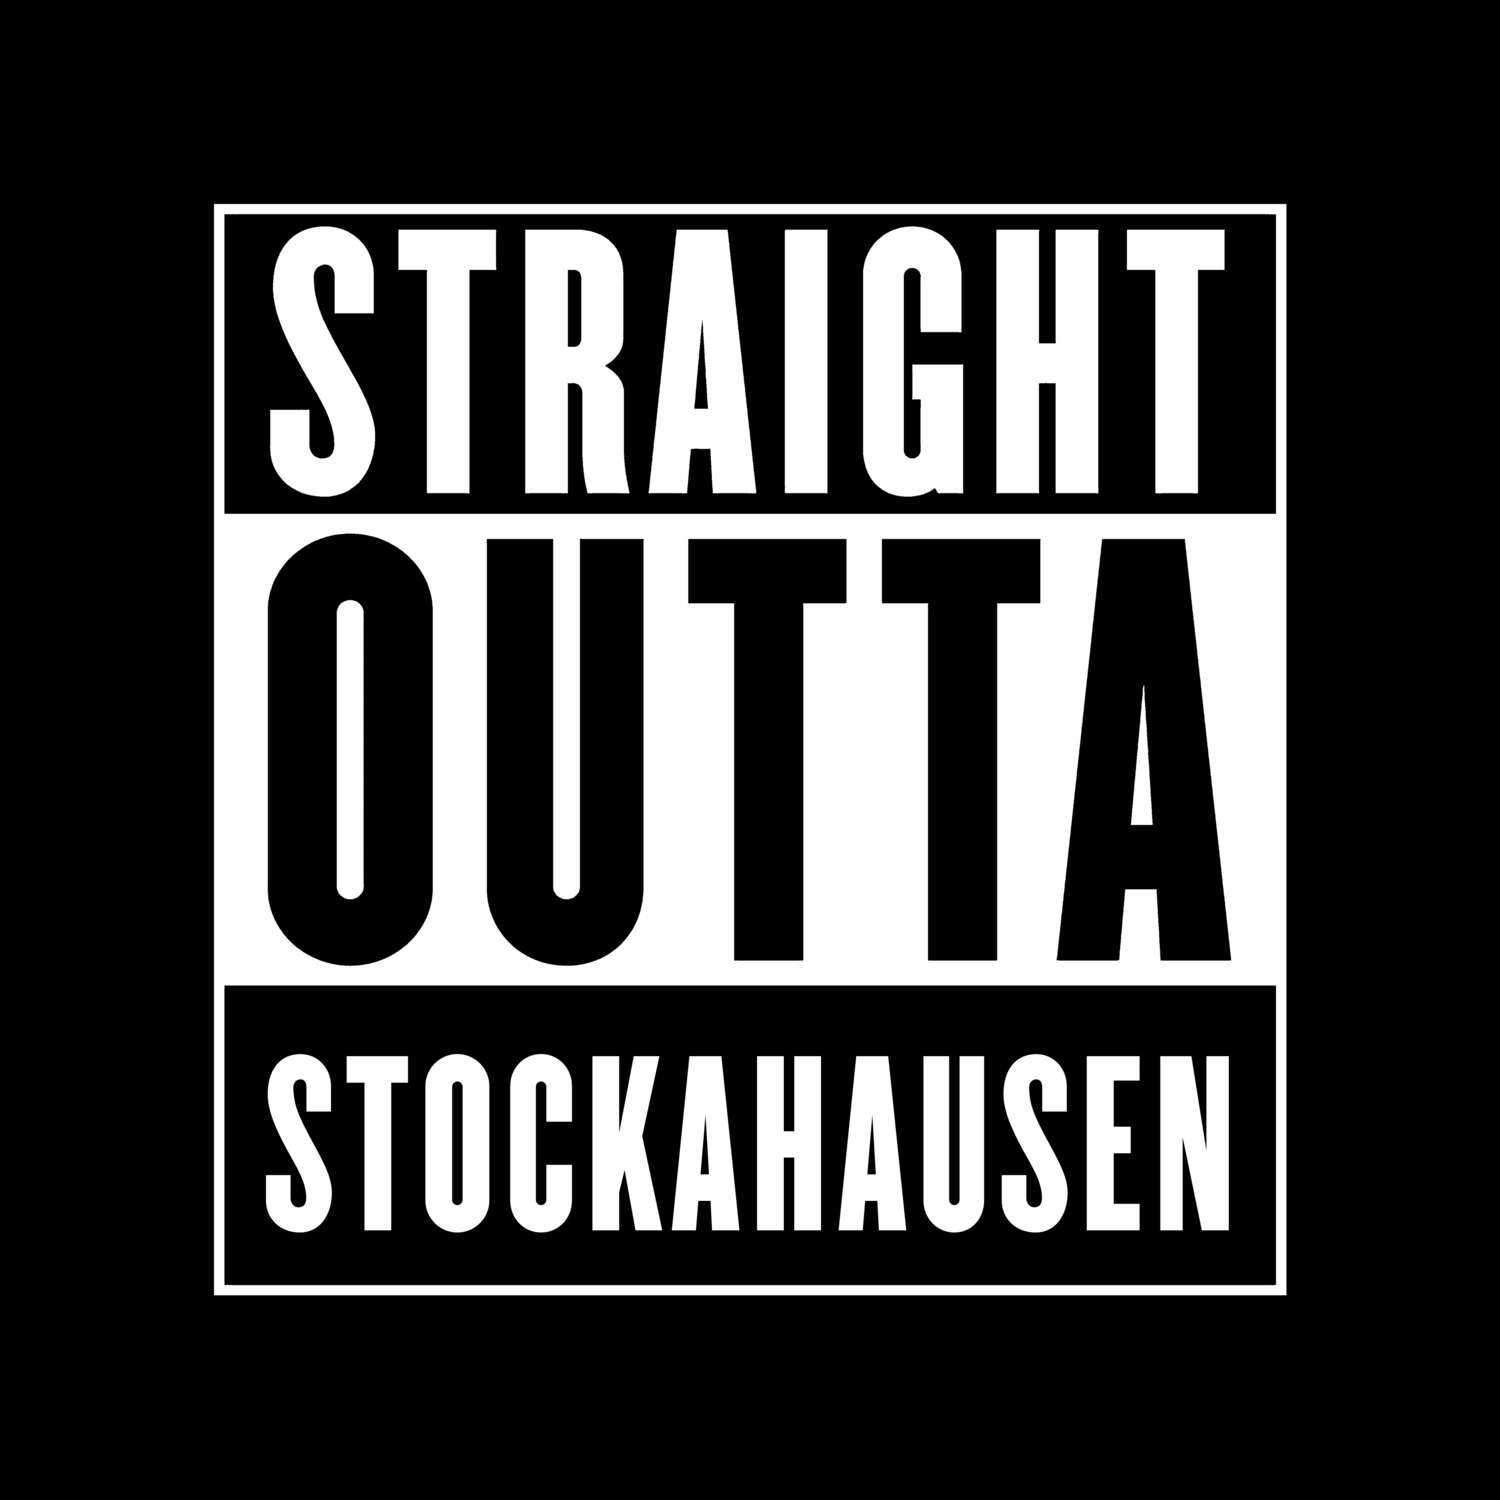 Stockahausen T-Shirt »Straight Outta«